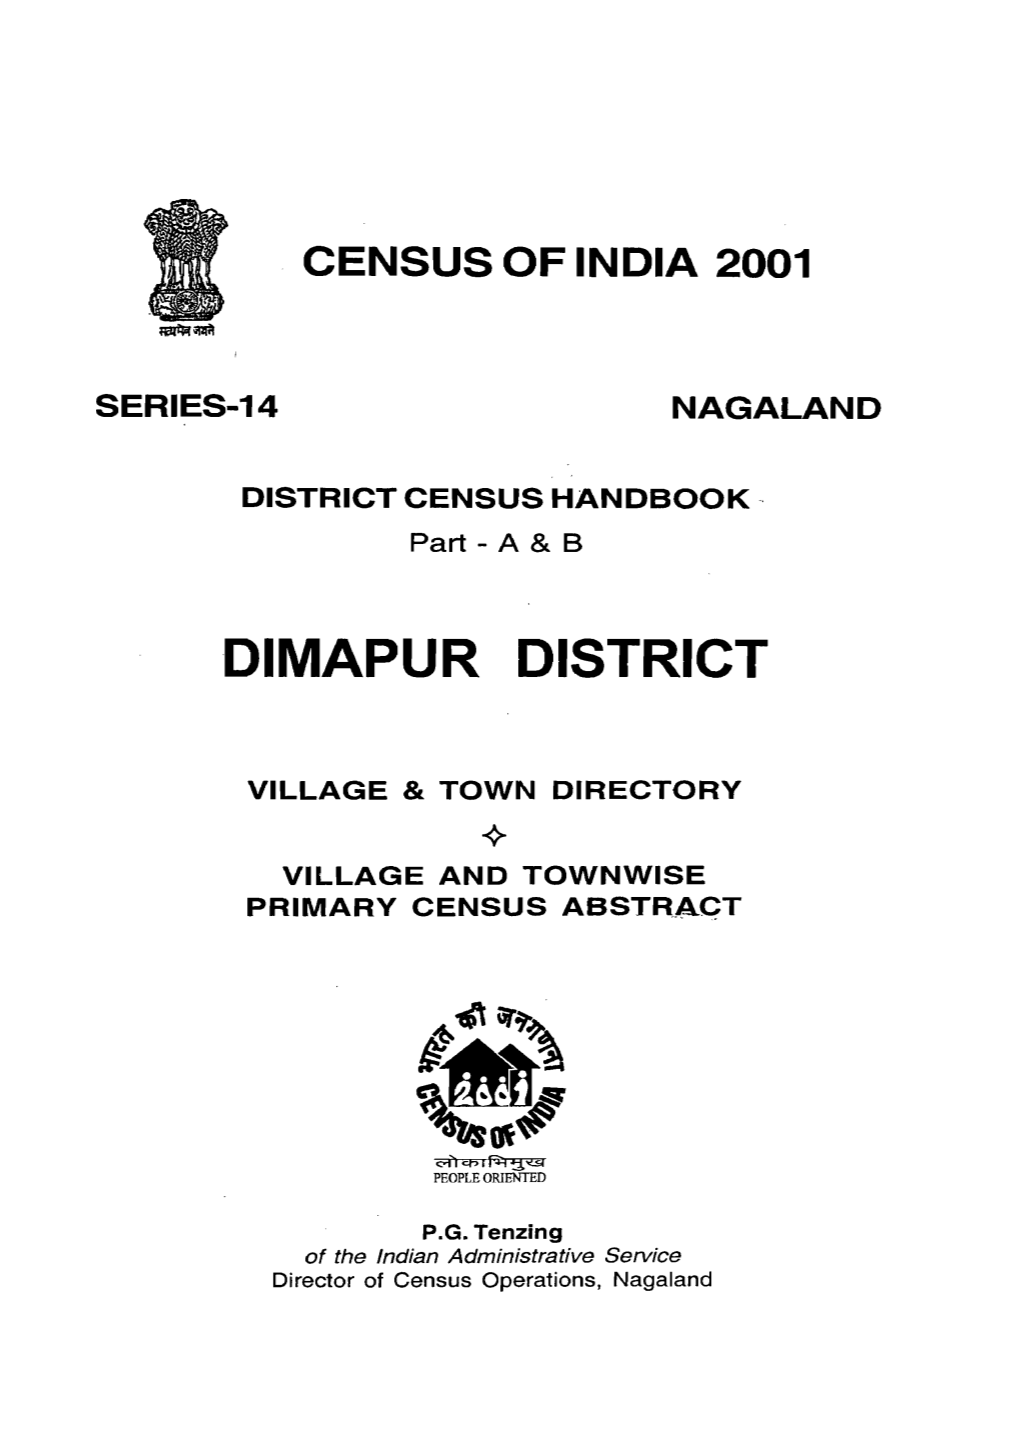 District Census Handbook, Dimapur, Part